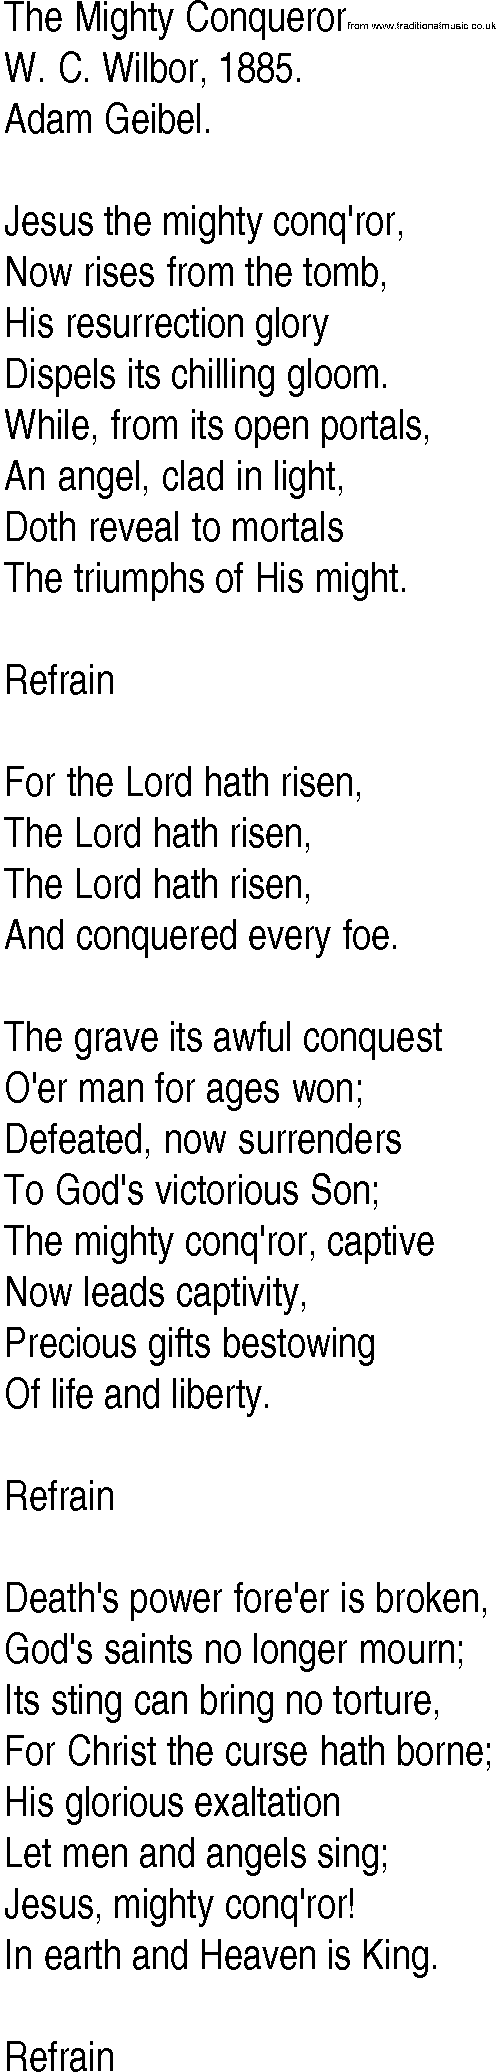 Hymn and Gospel Song: The Mighty Conqueror by W C Wilbor lyrics